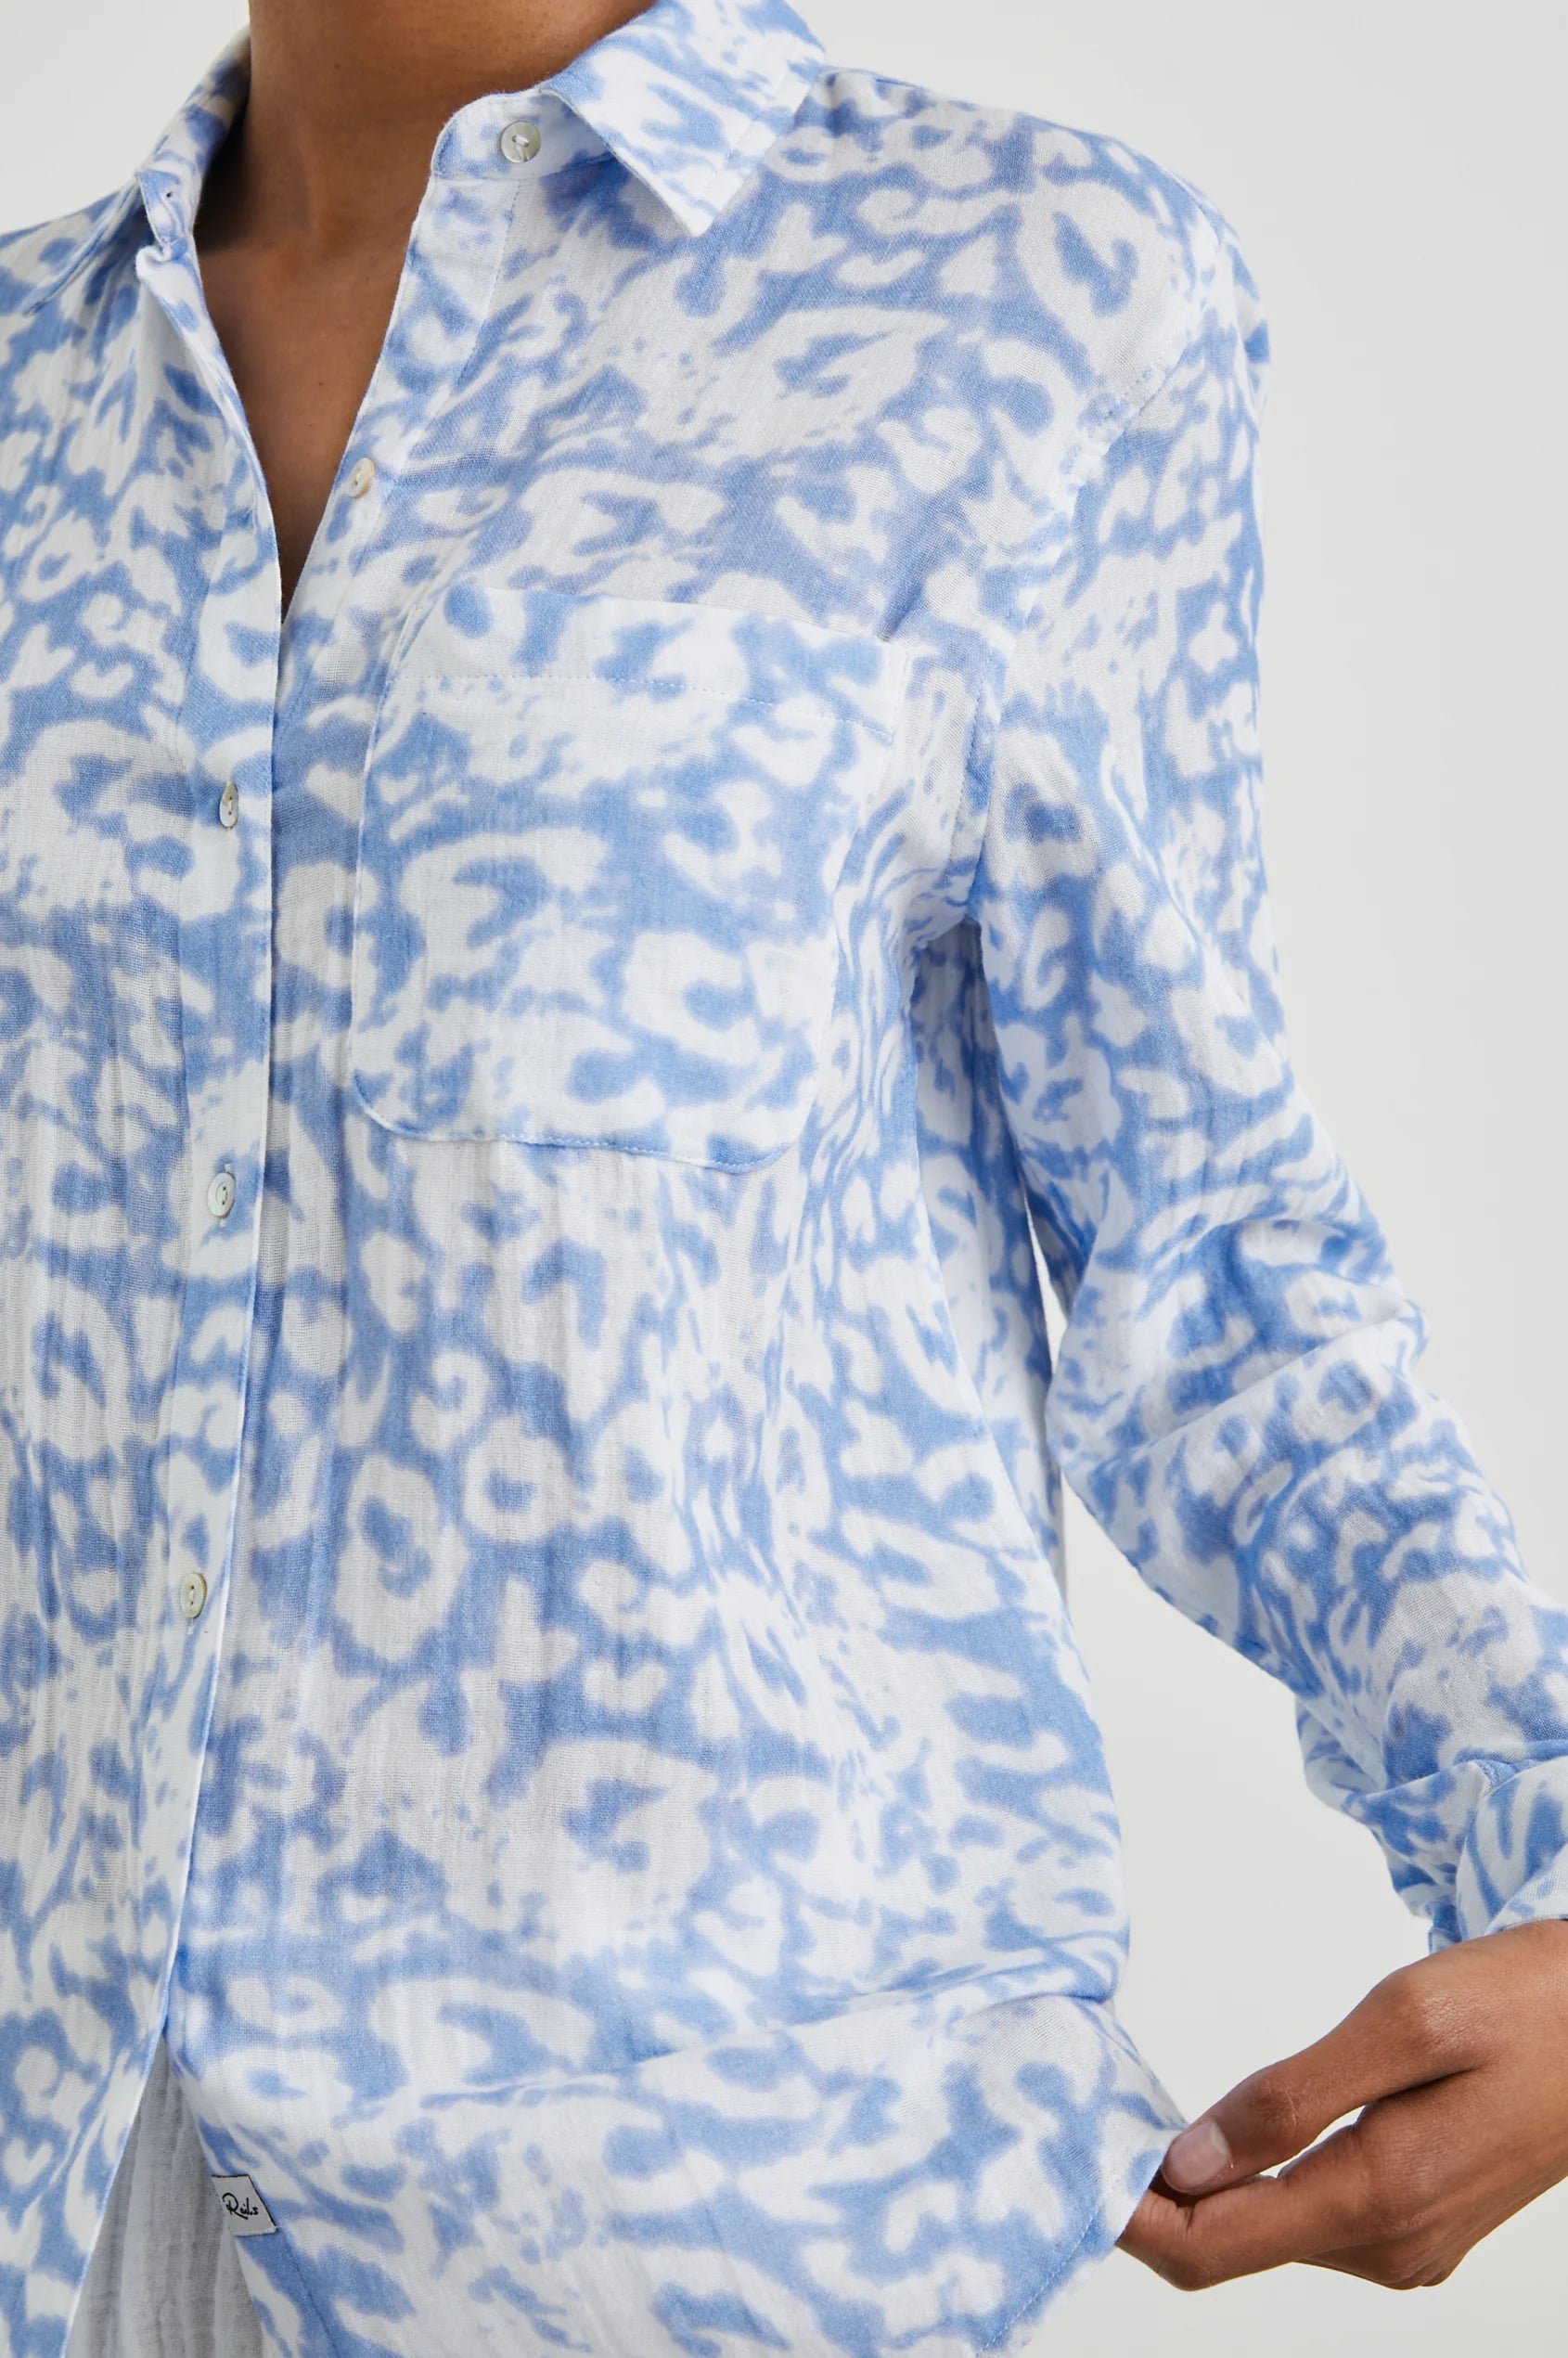 Ellis Shirt - Blue Diffused Cheetah